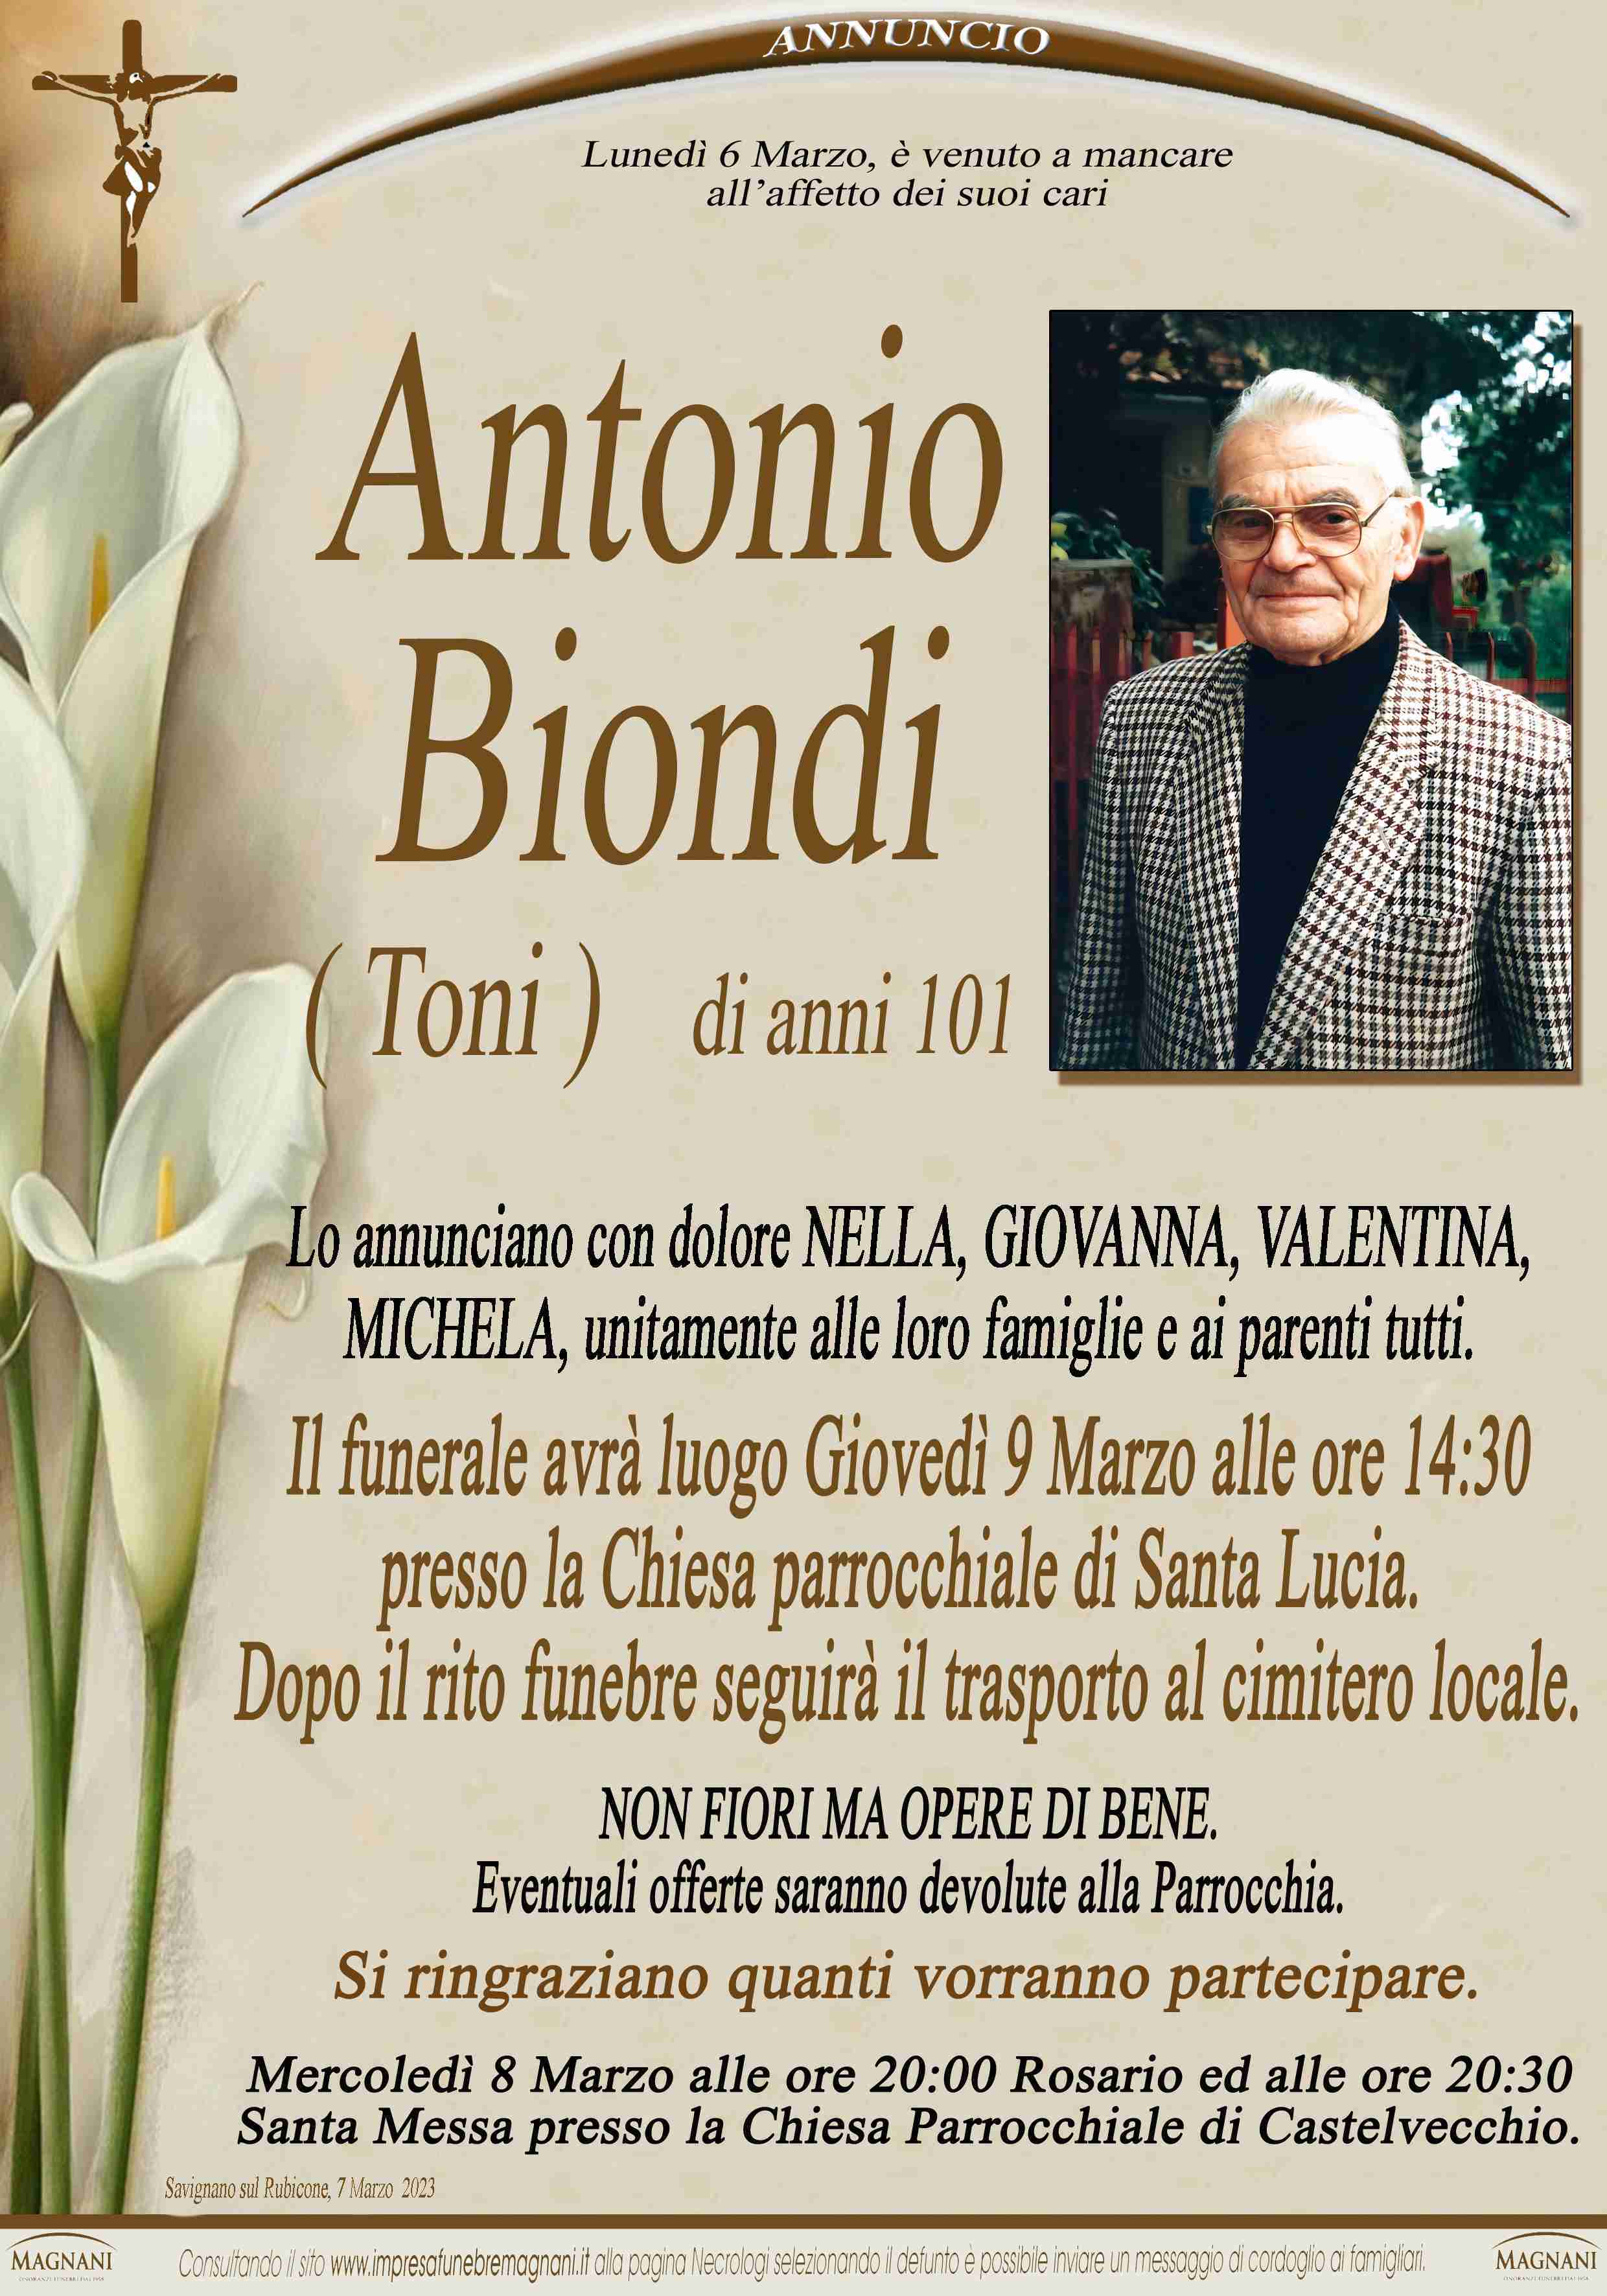 Antonio Biondi